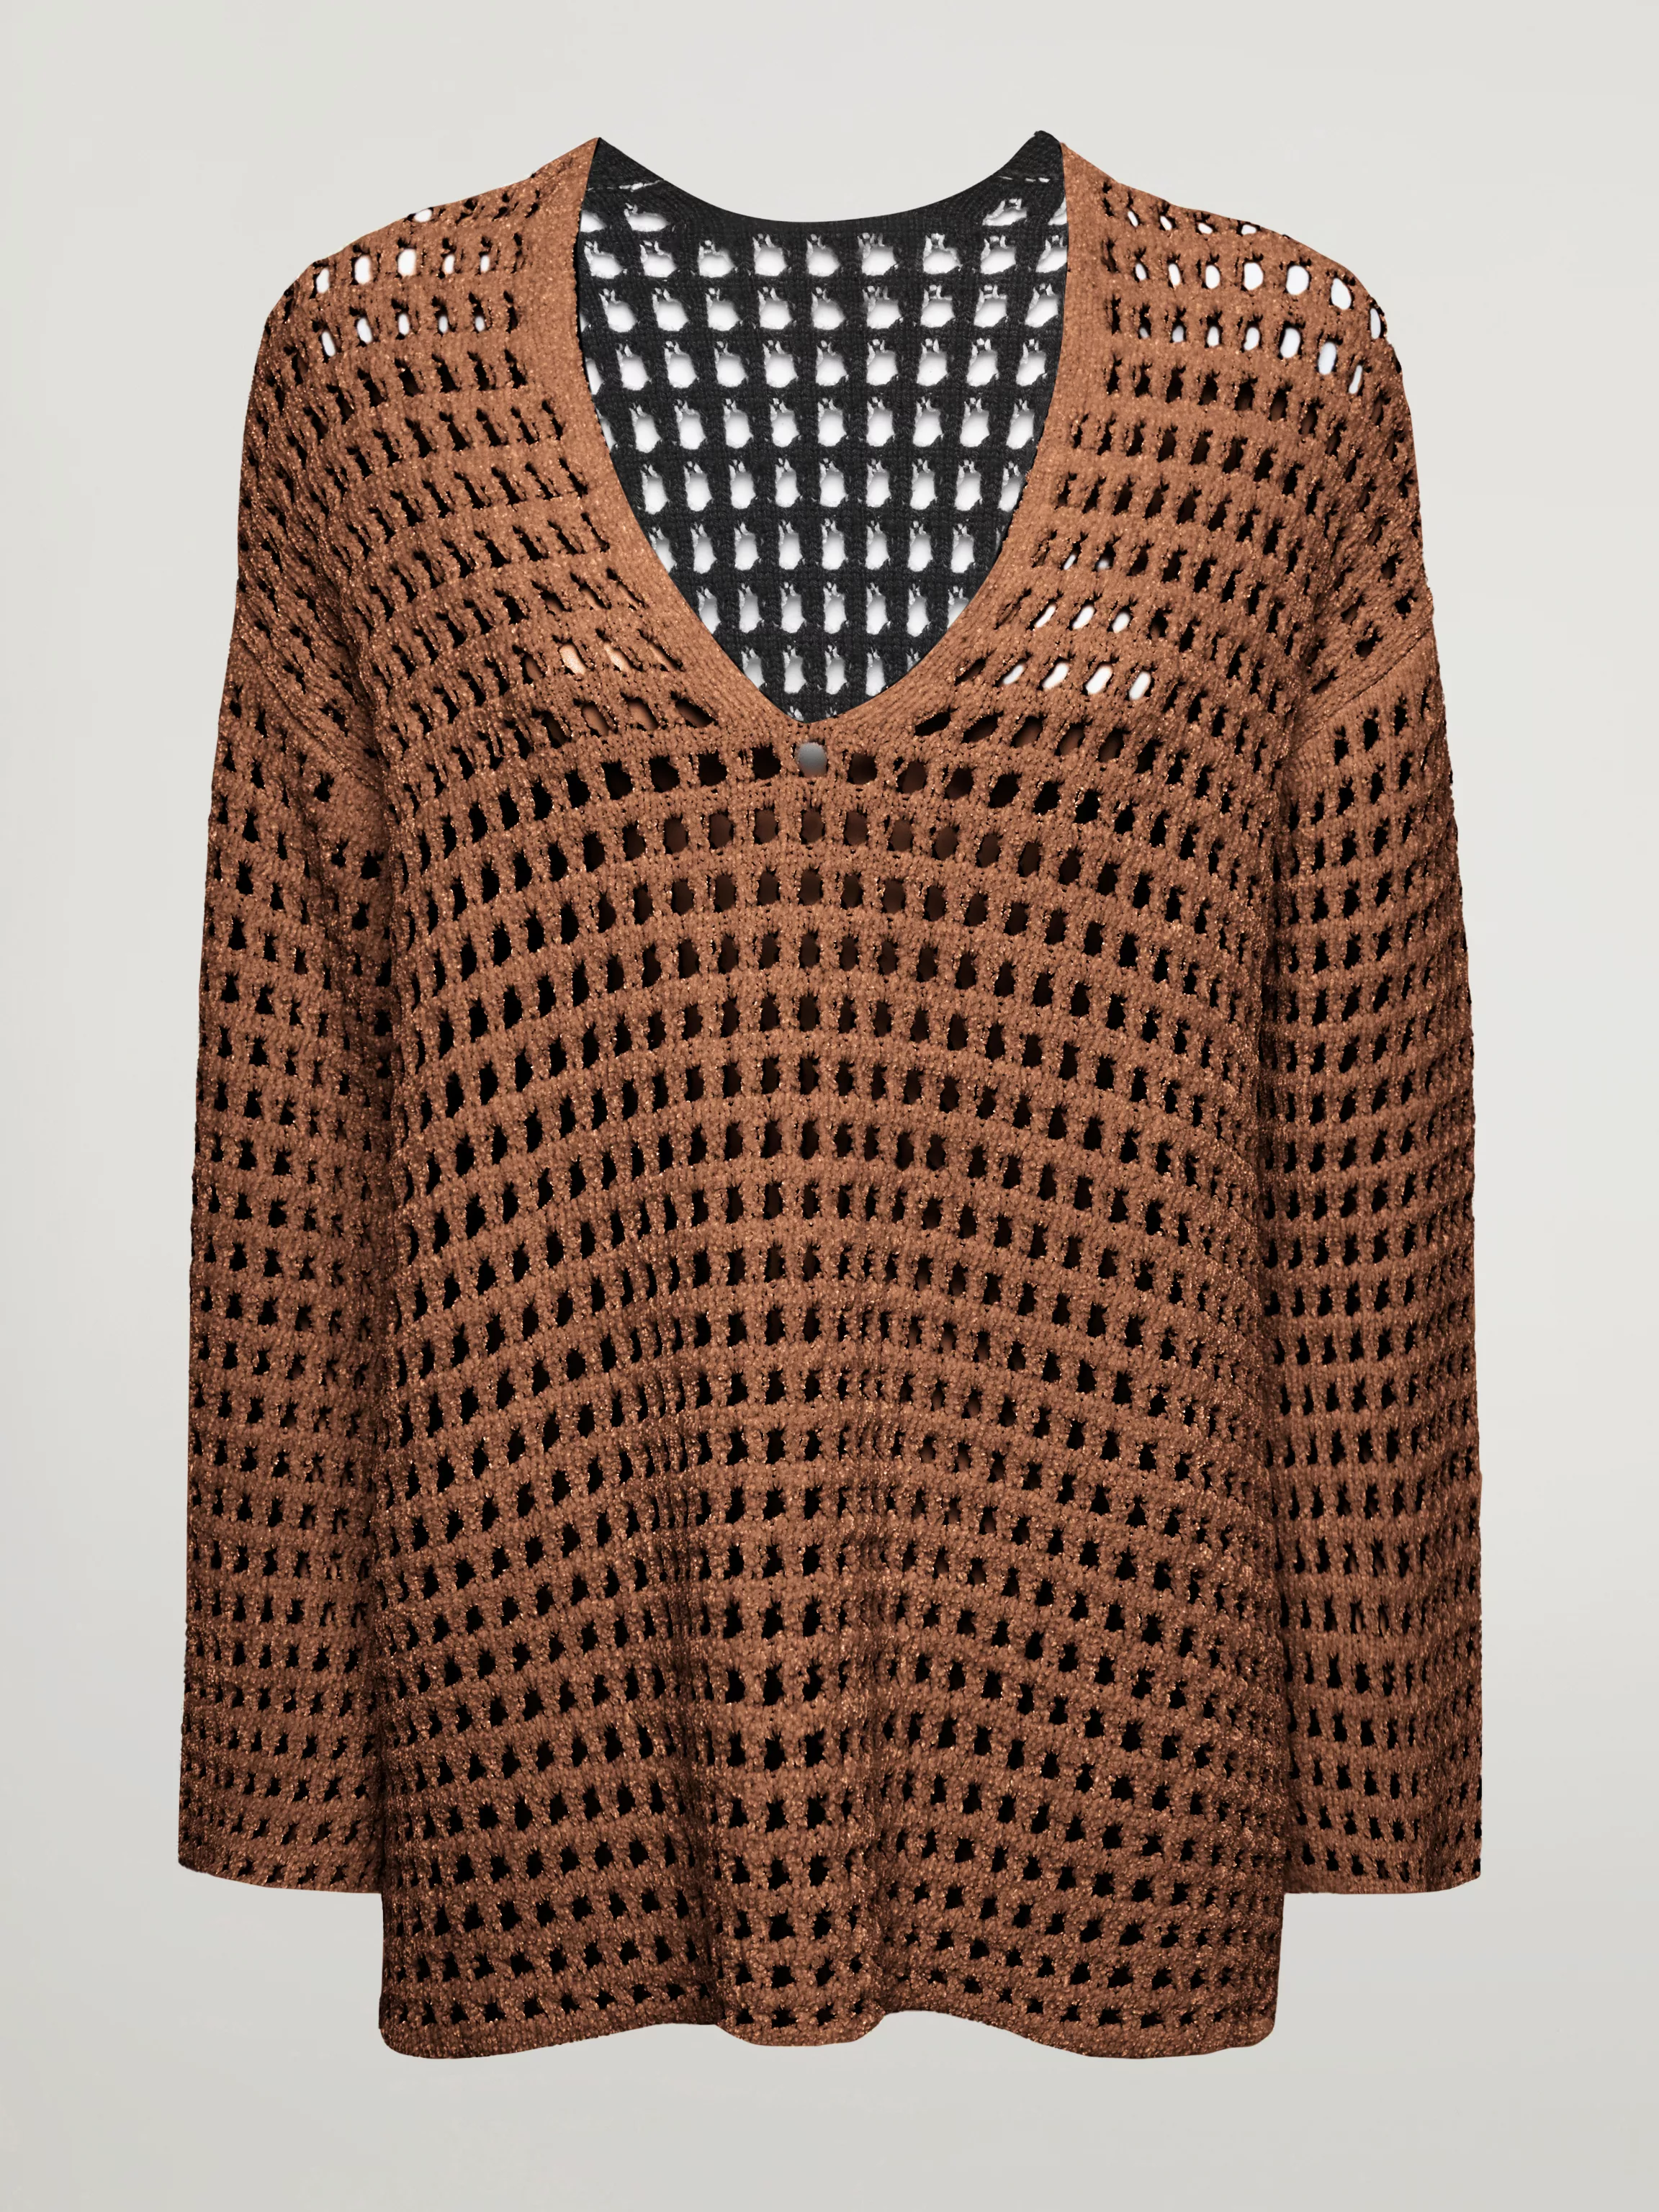 Wolford - Knit Net Top Long Sleeves, Frau, sugar almond/black, Größe: XS günstig online kaufen